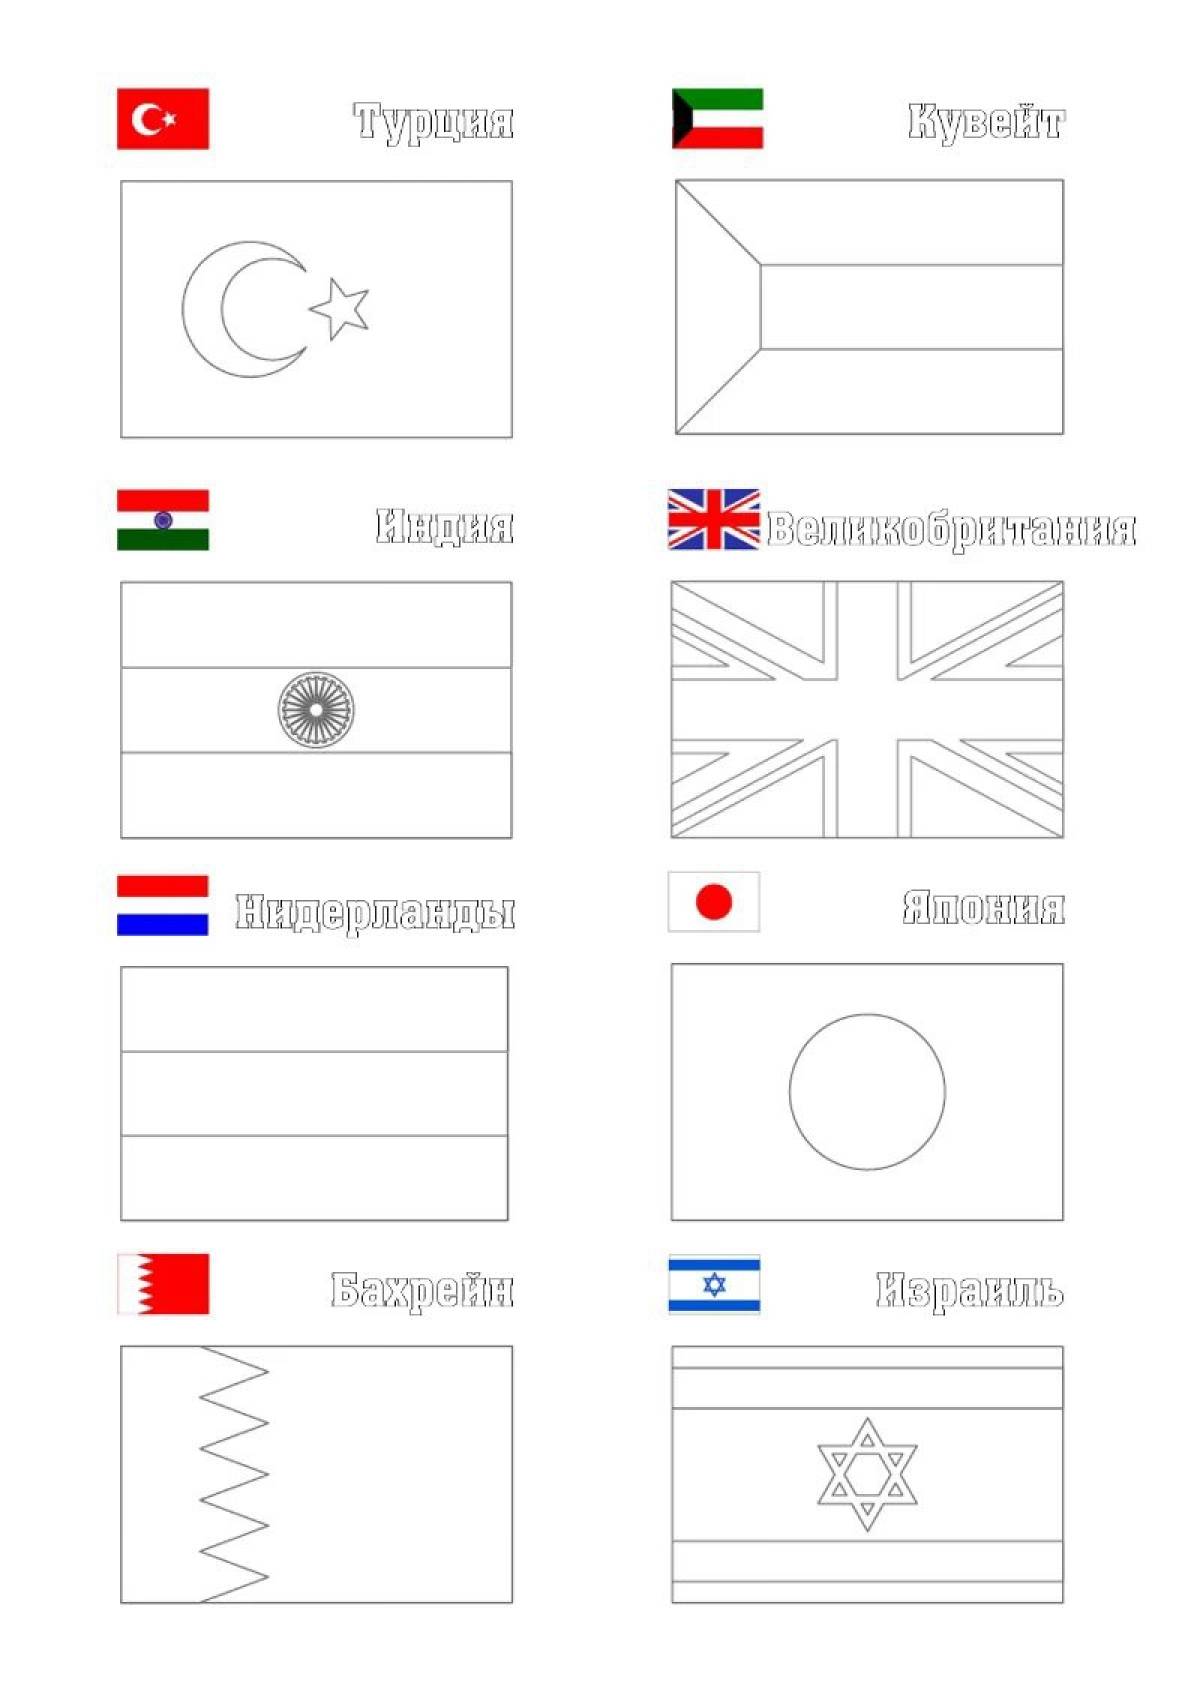 Fascinating world flags for schoolchildren